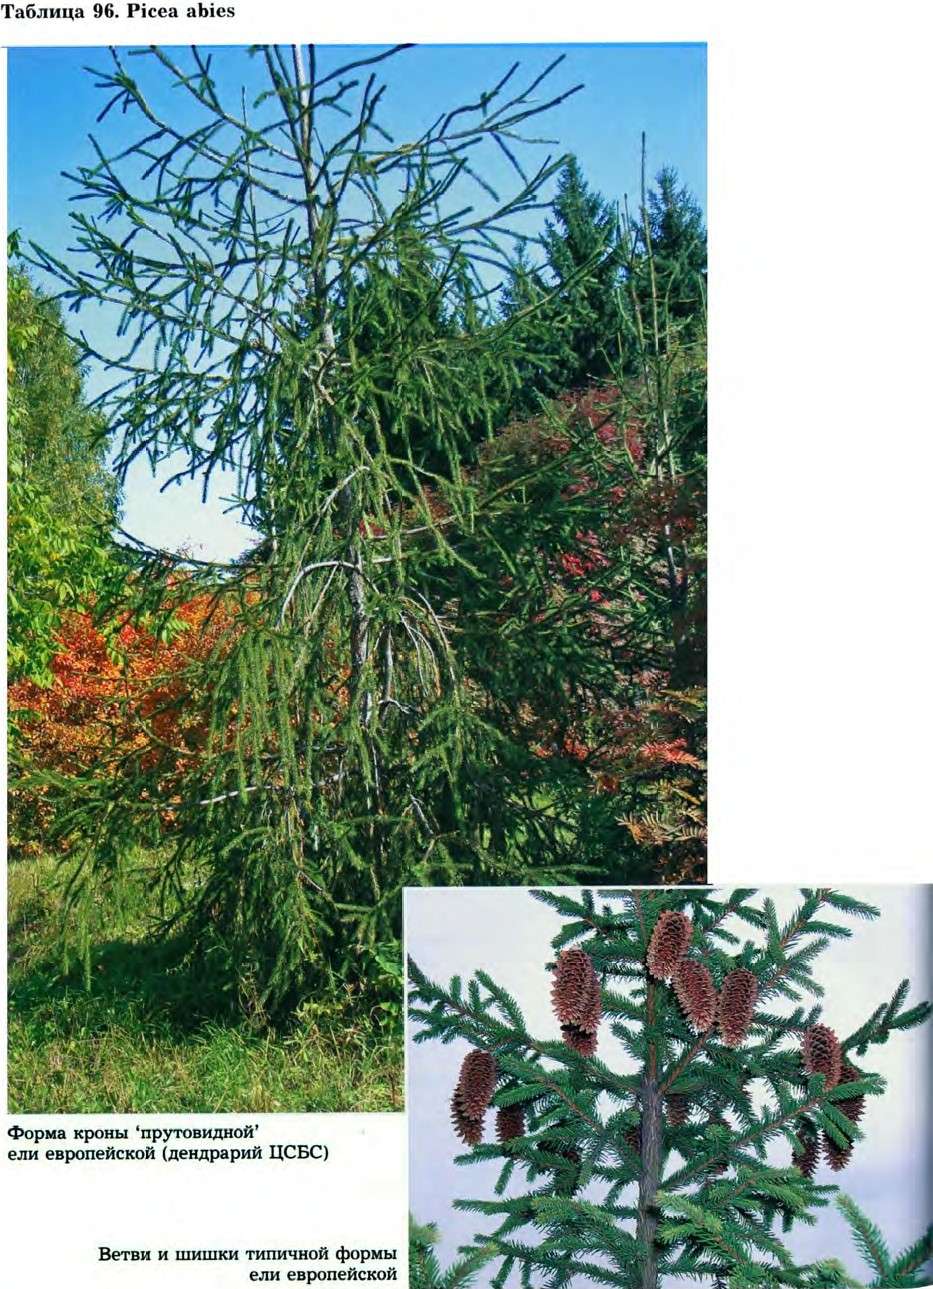 Picea abies (L.) Karst. — Ель европейская, пихтовая (Ш) Picea-10